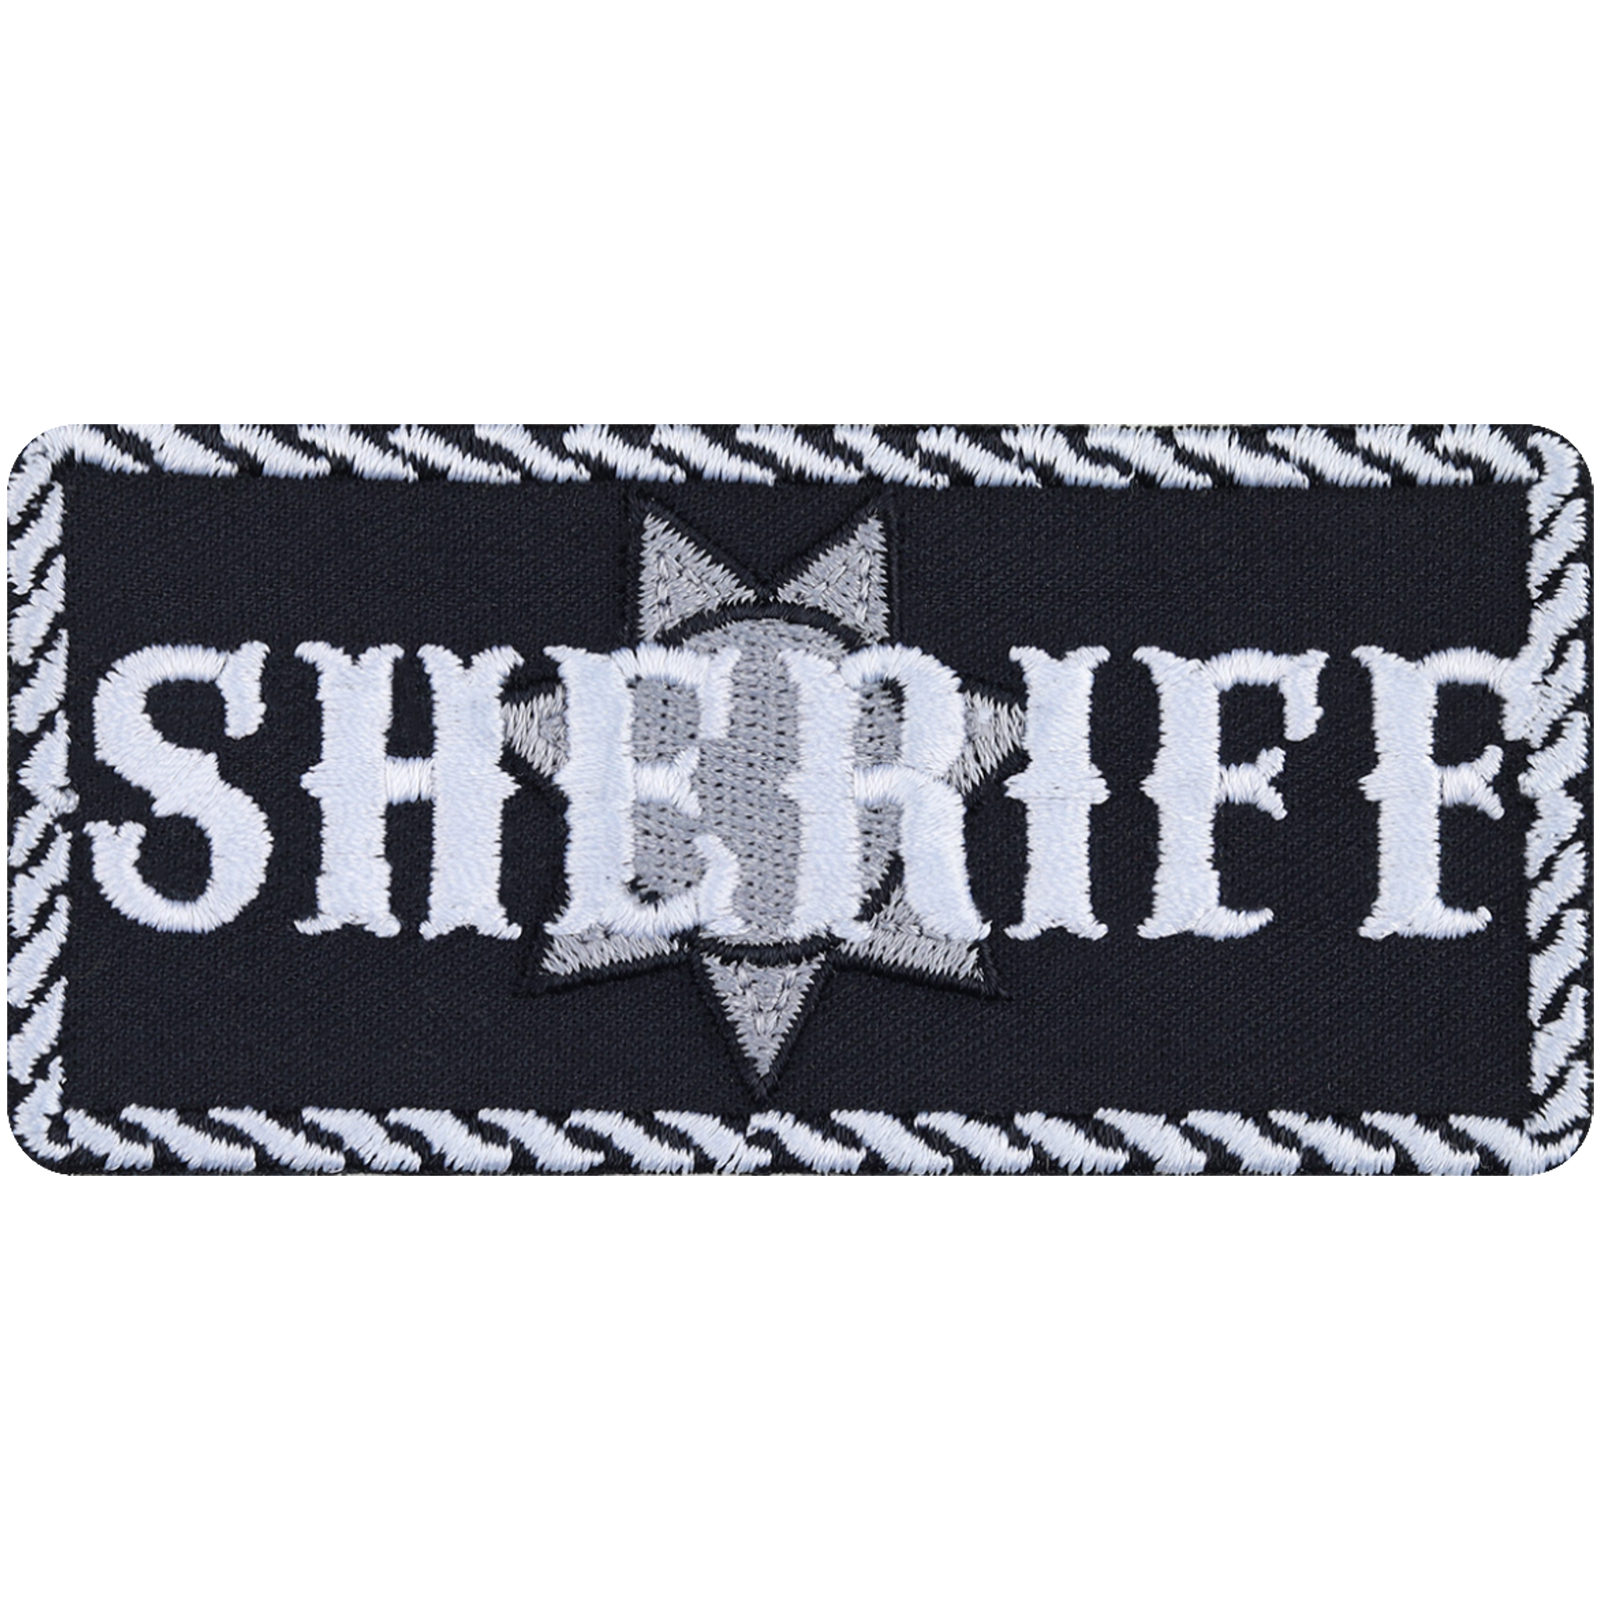 Sheriff - Patch